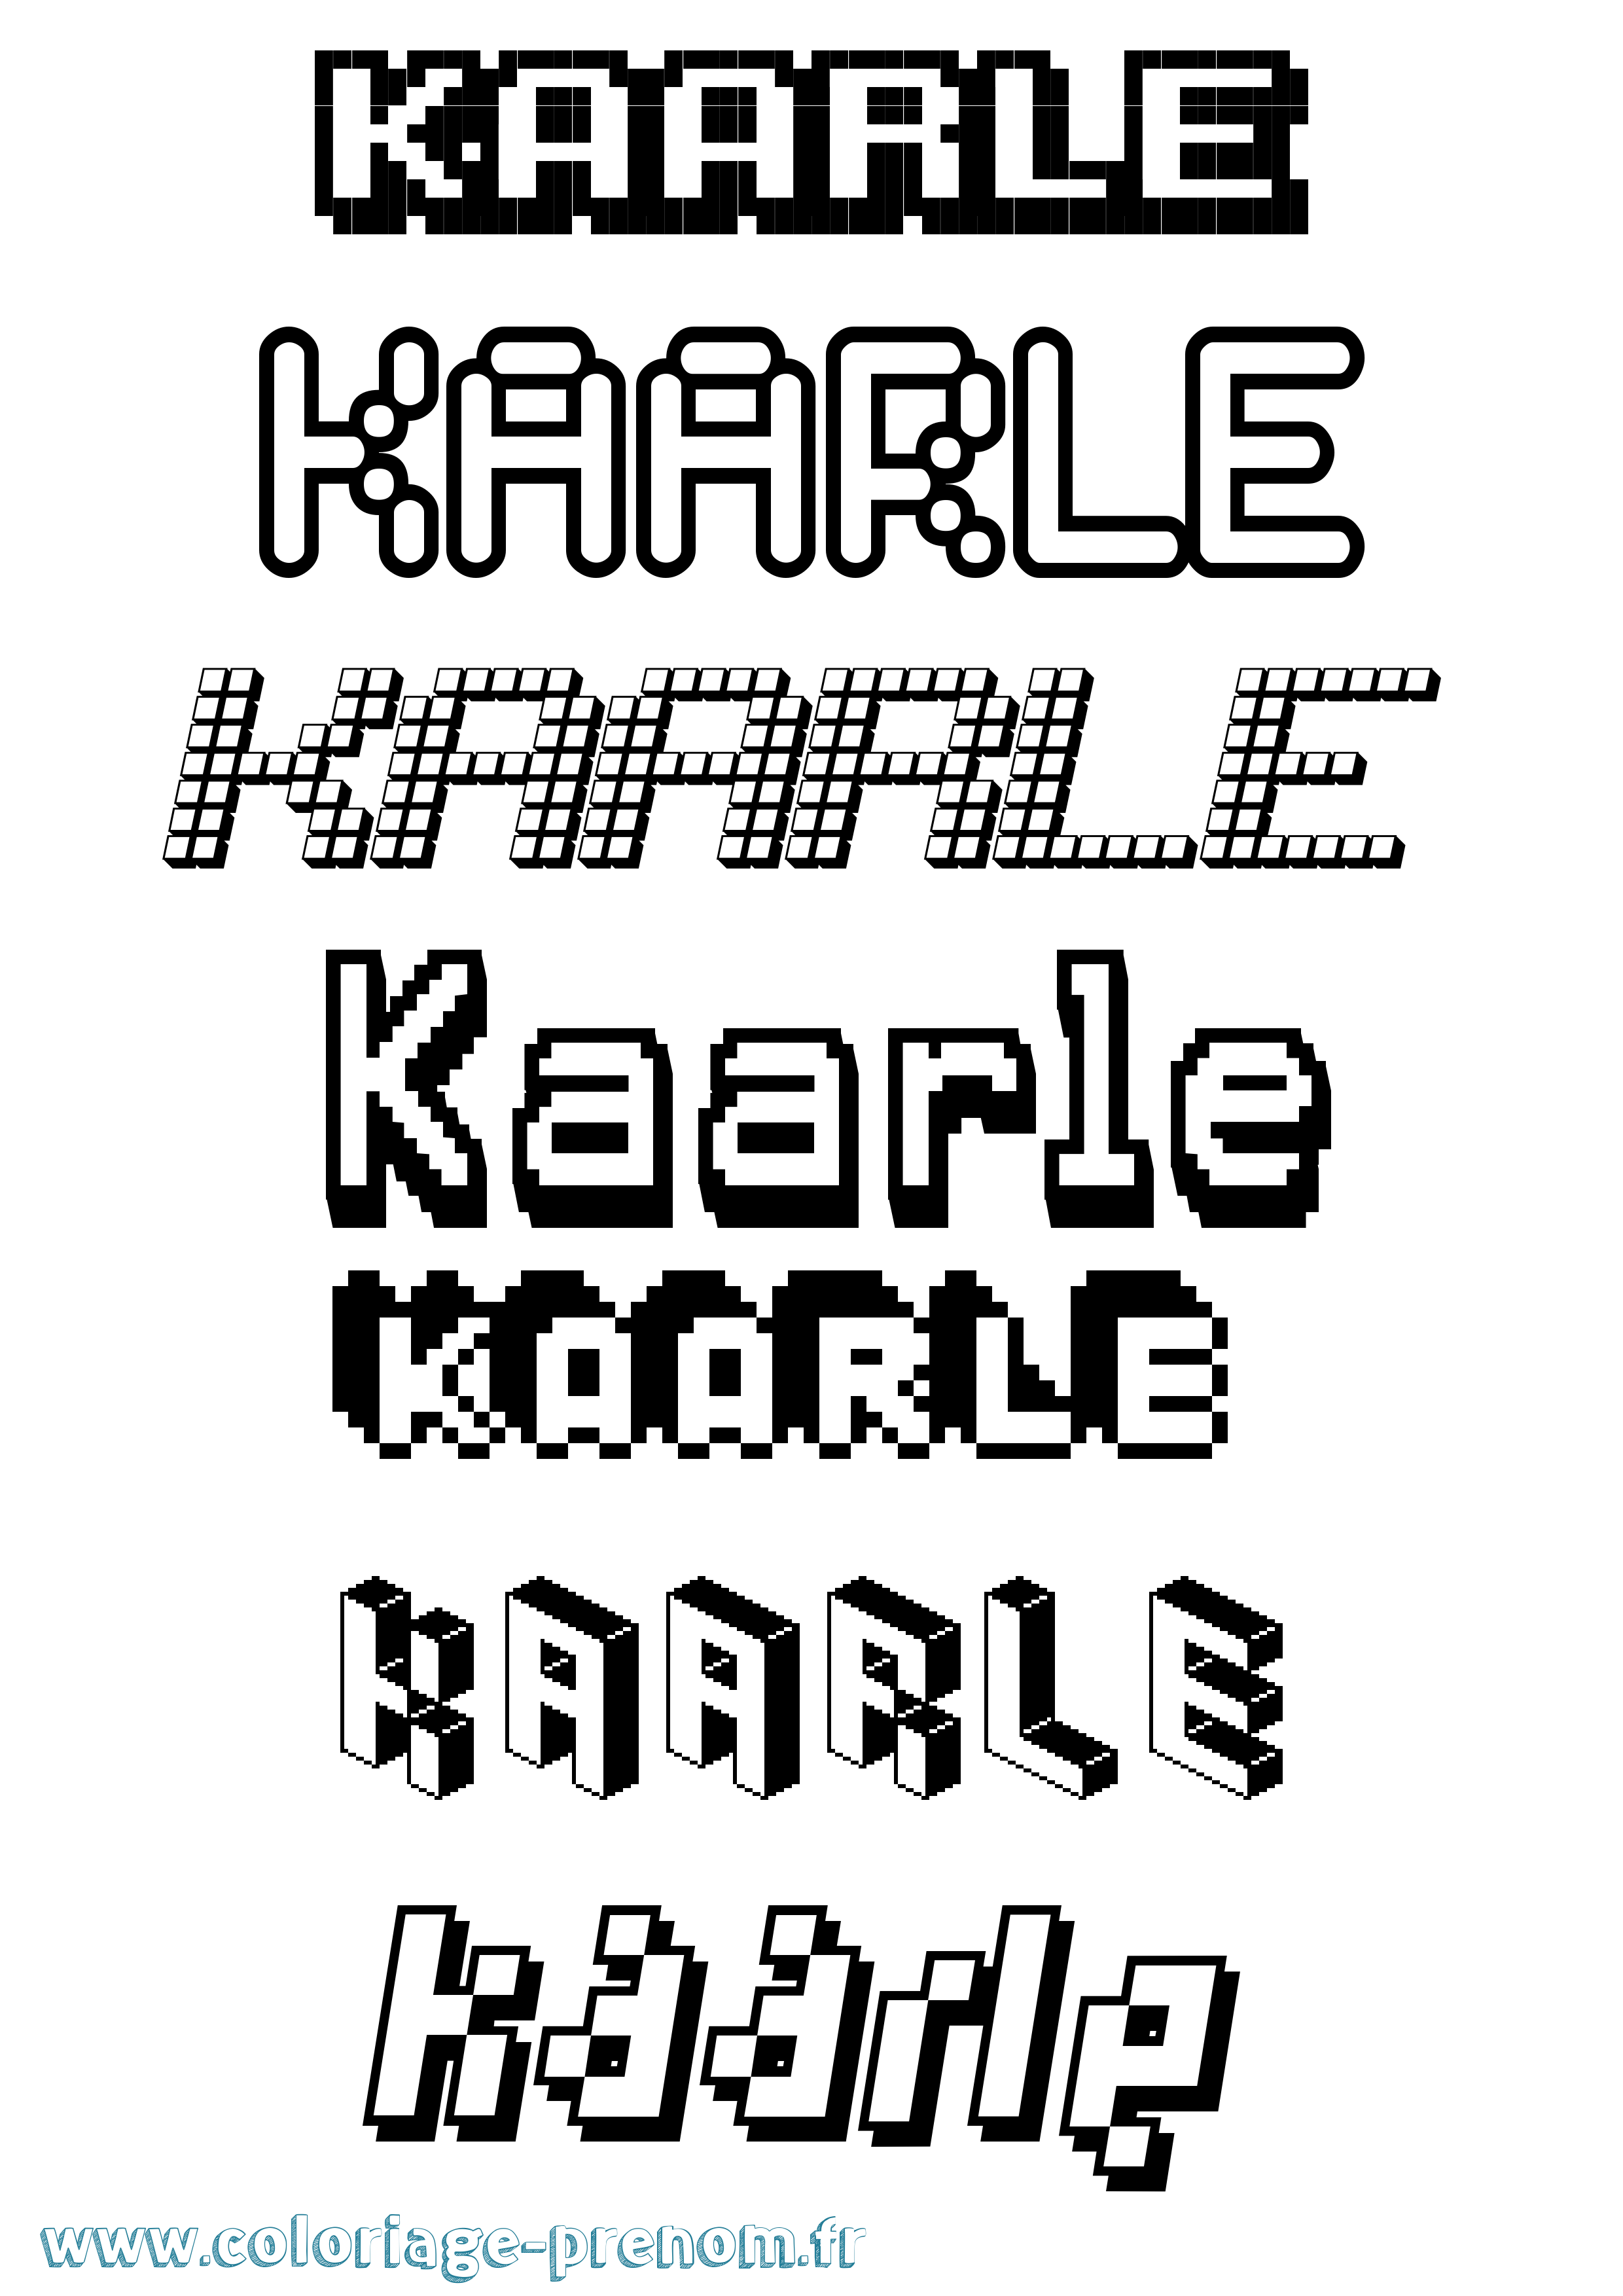 Coloriage prénom Kaarle Pixel